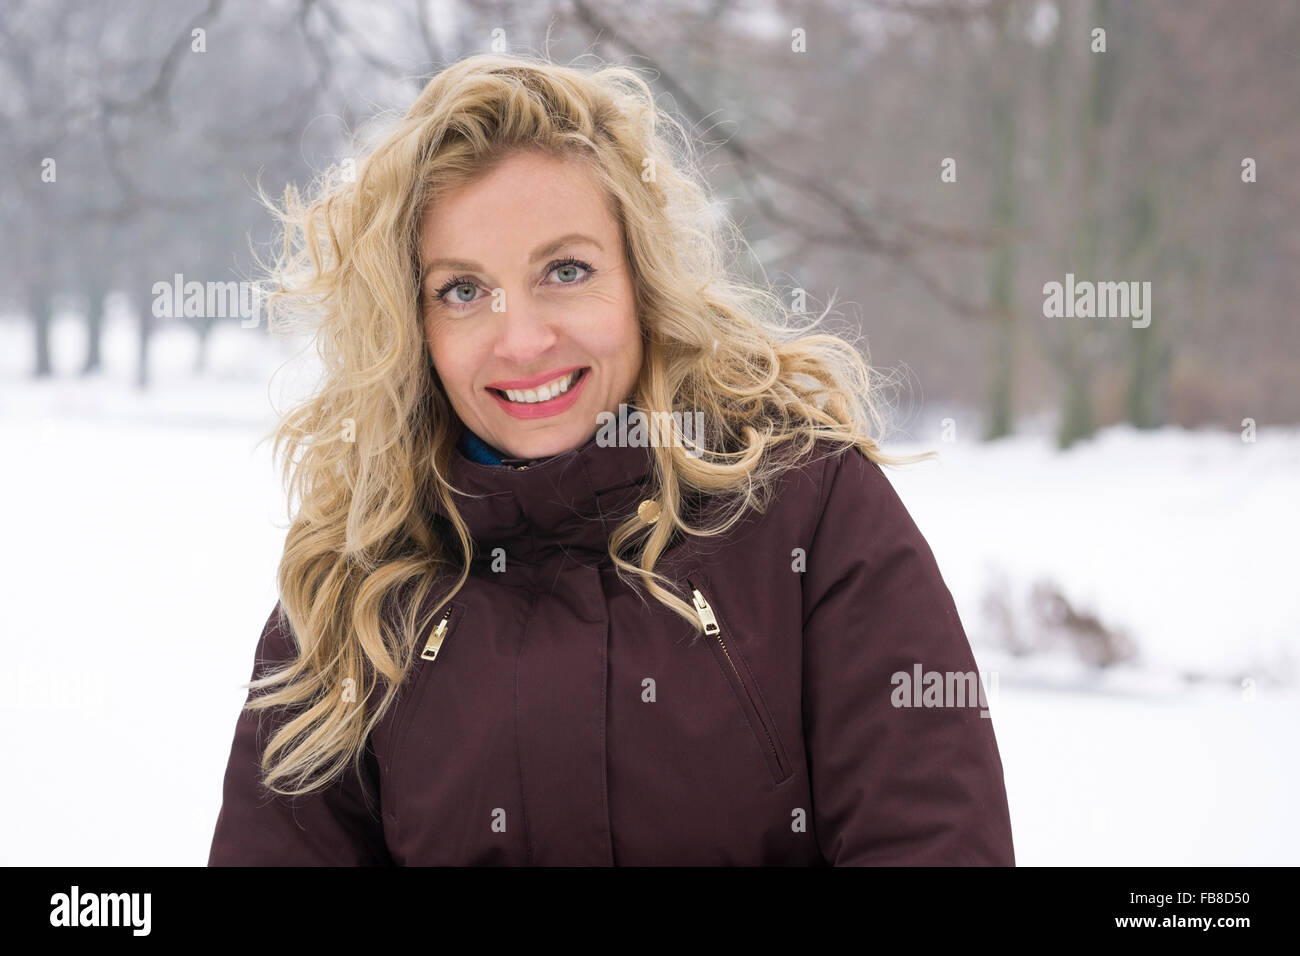 woman enjoying snow in winter Stock Photo